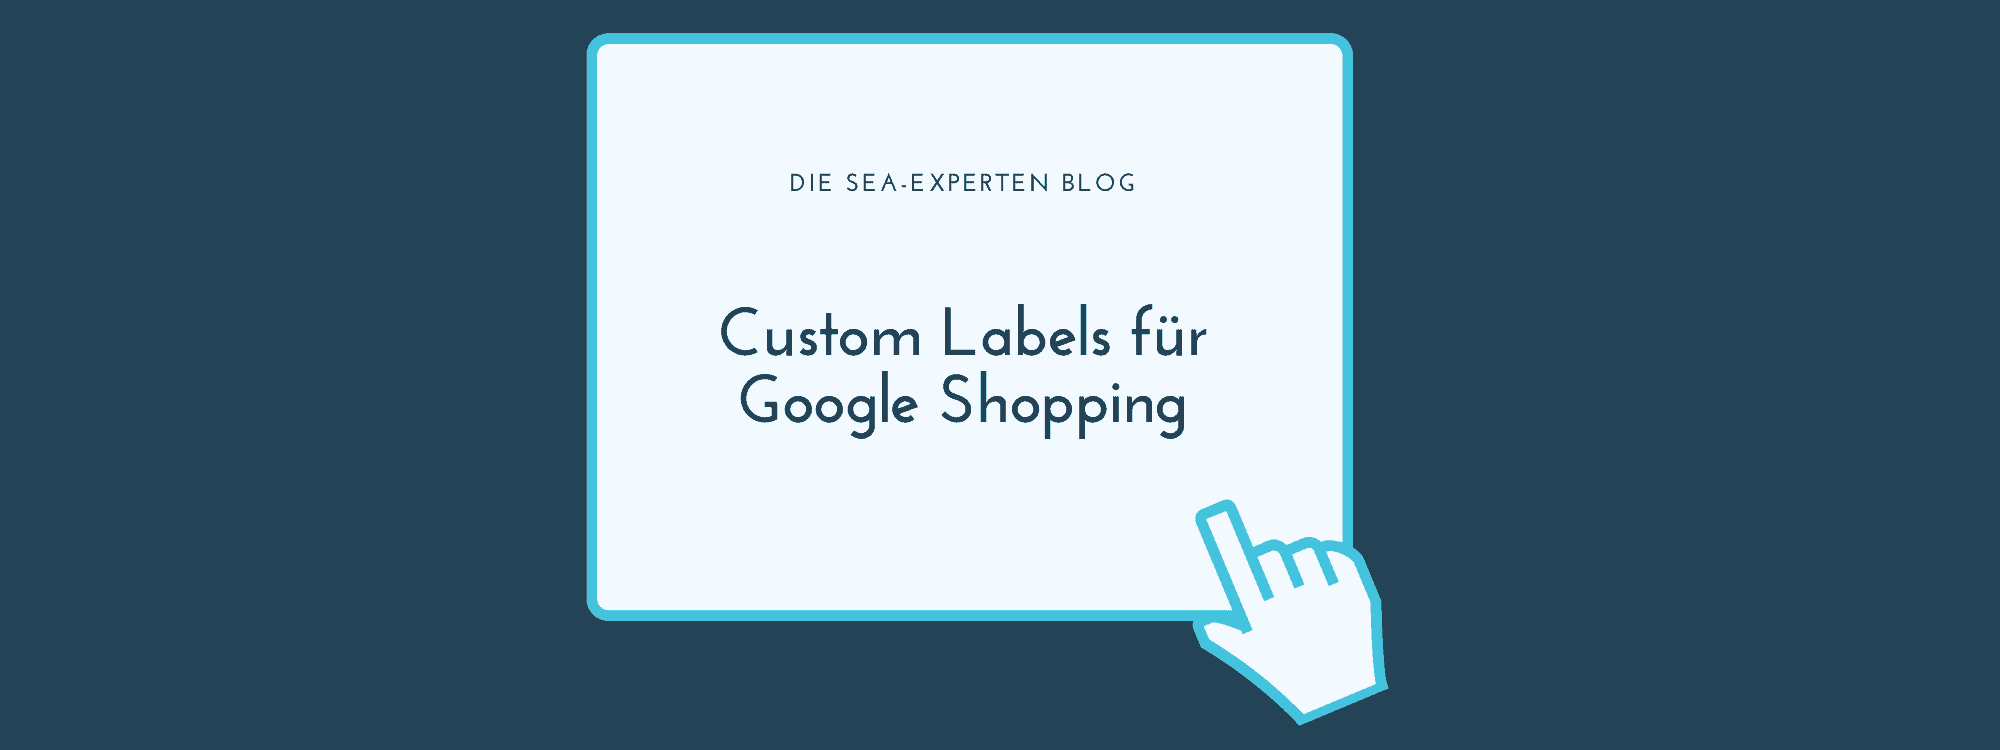 Custom Labels für Google Shopping